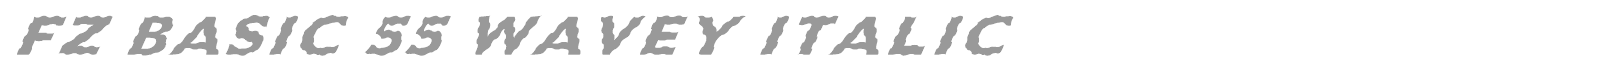 FZ BASIC 55 WAVEY ITALIC font preview